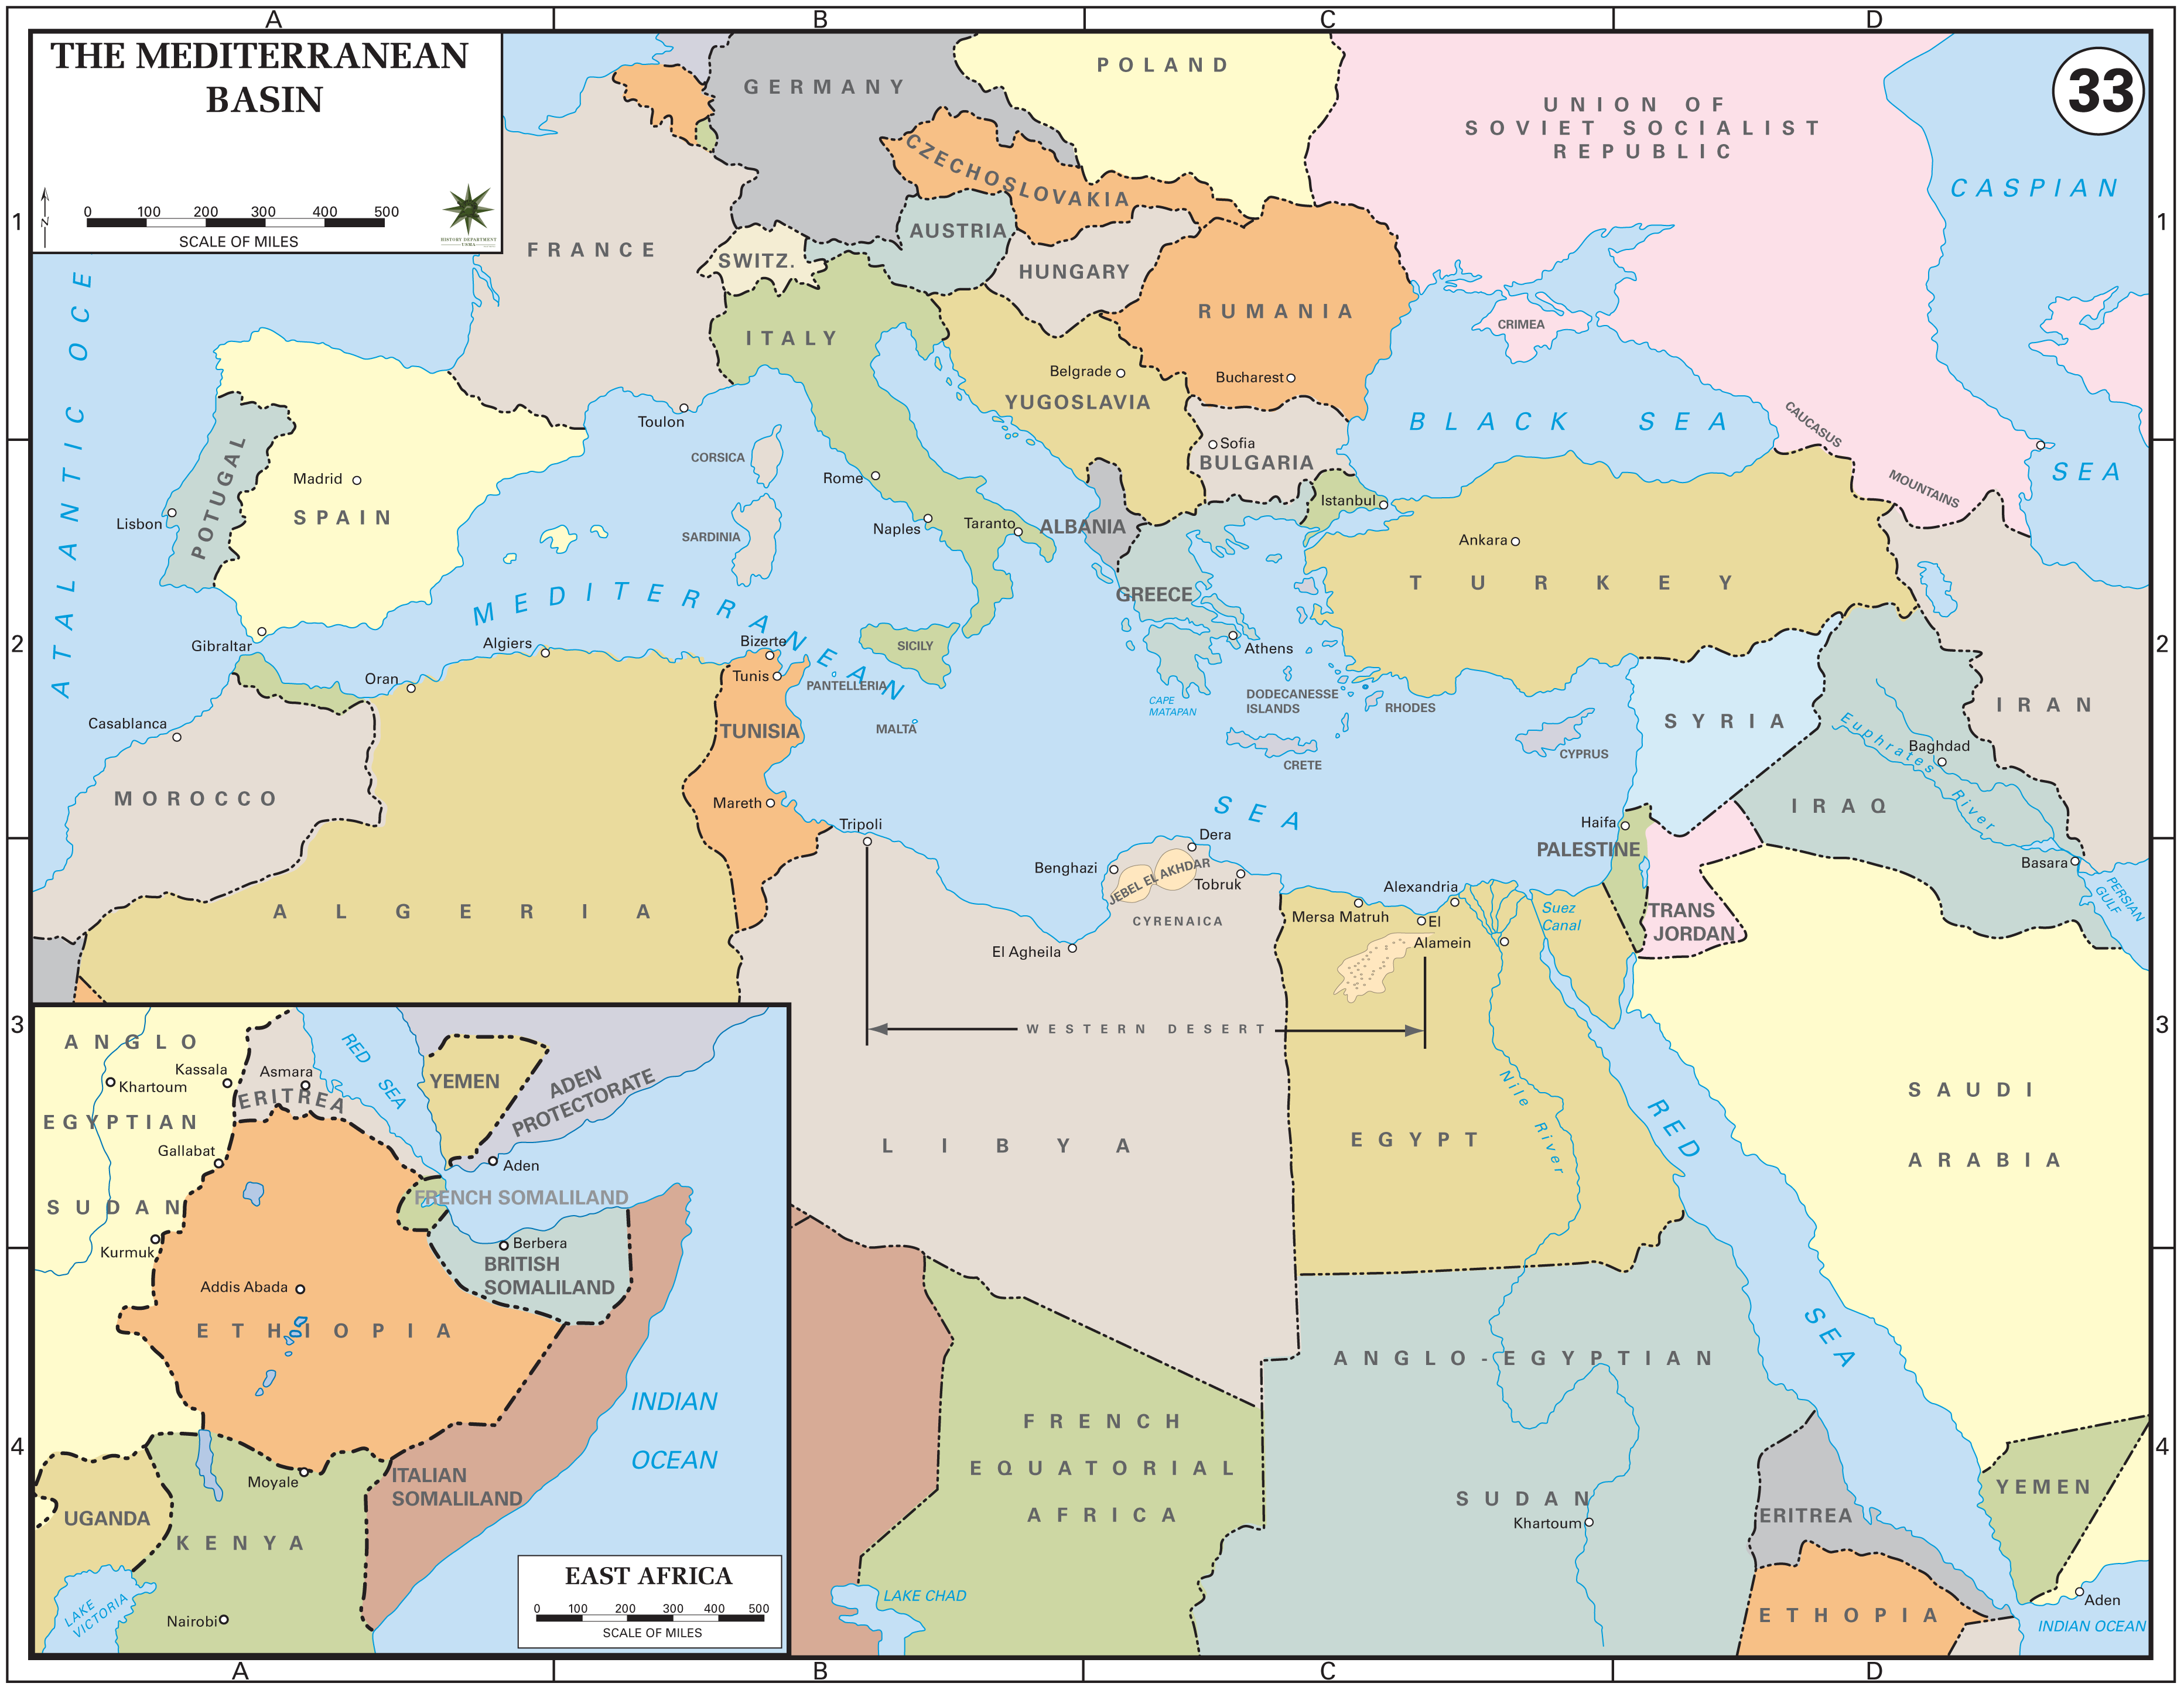 The Mediterranean Basin, 1939